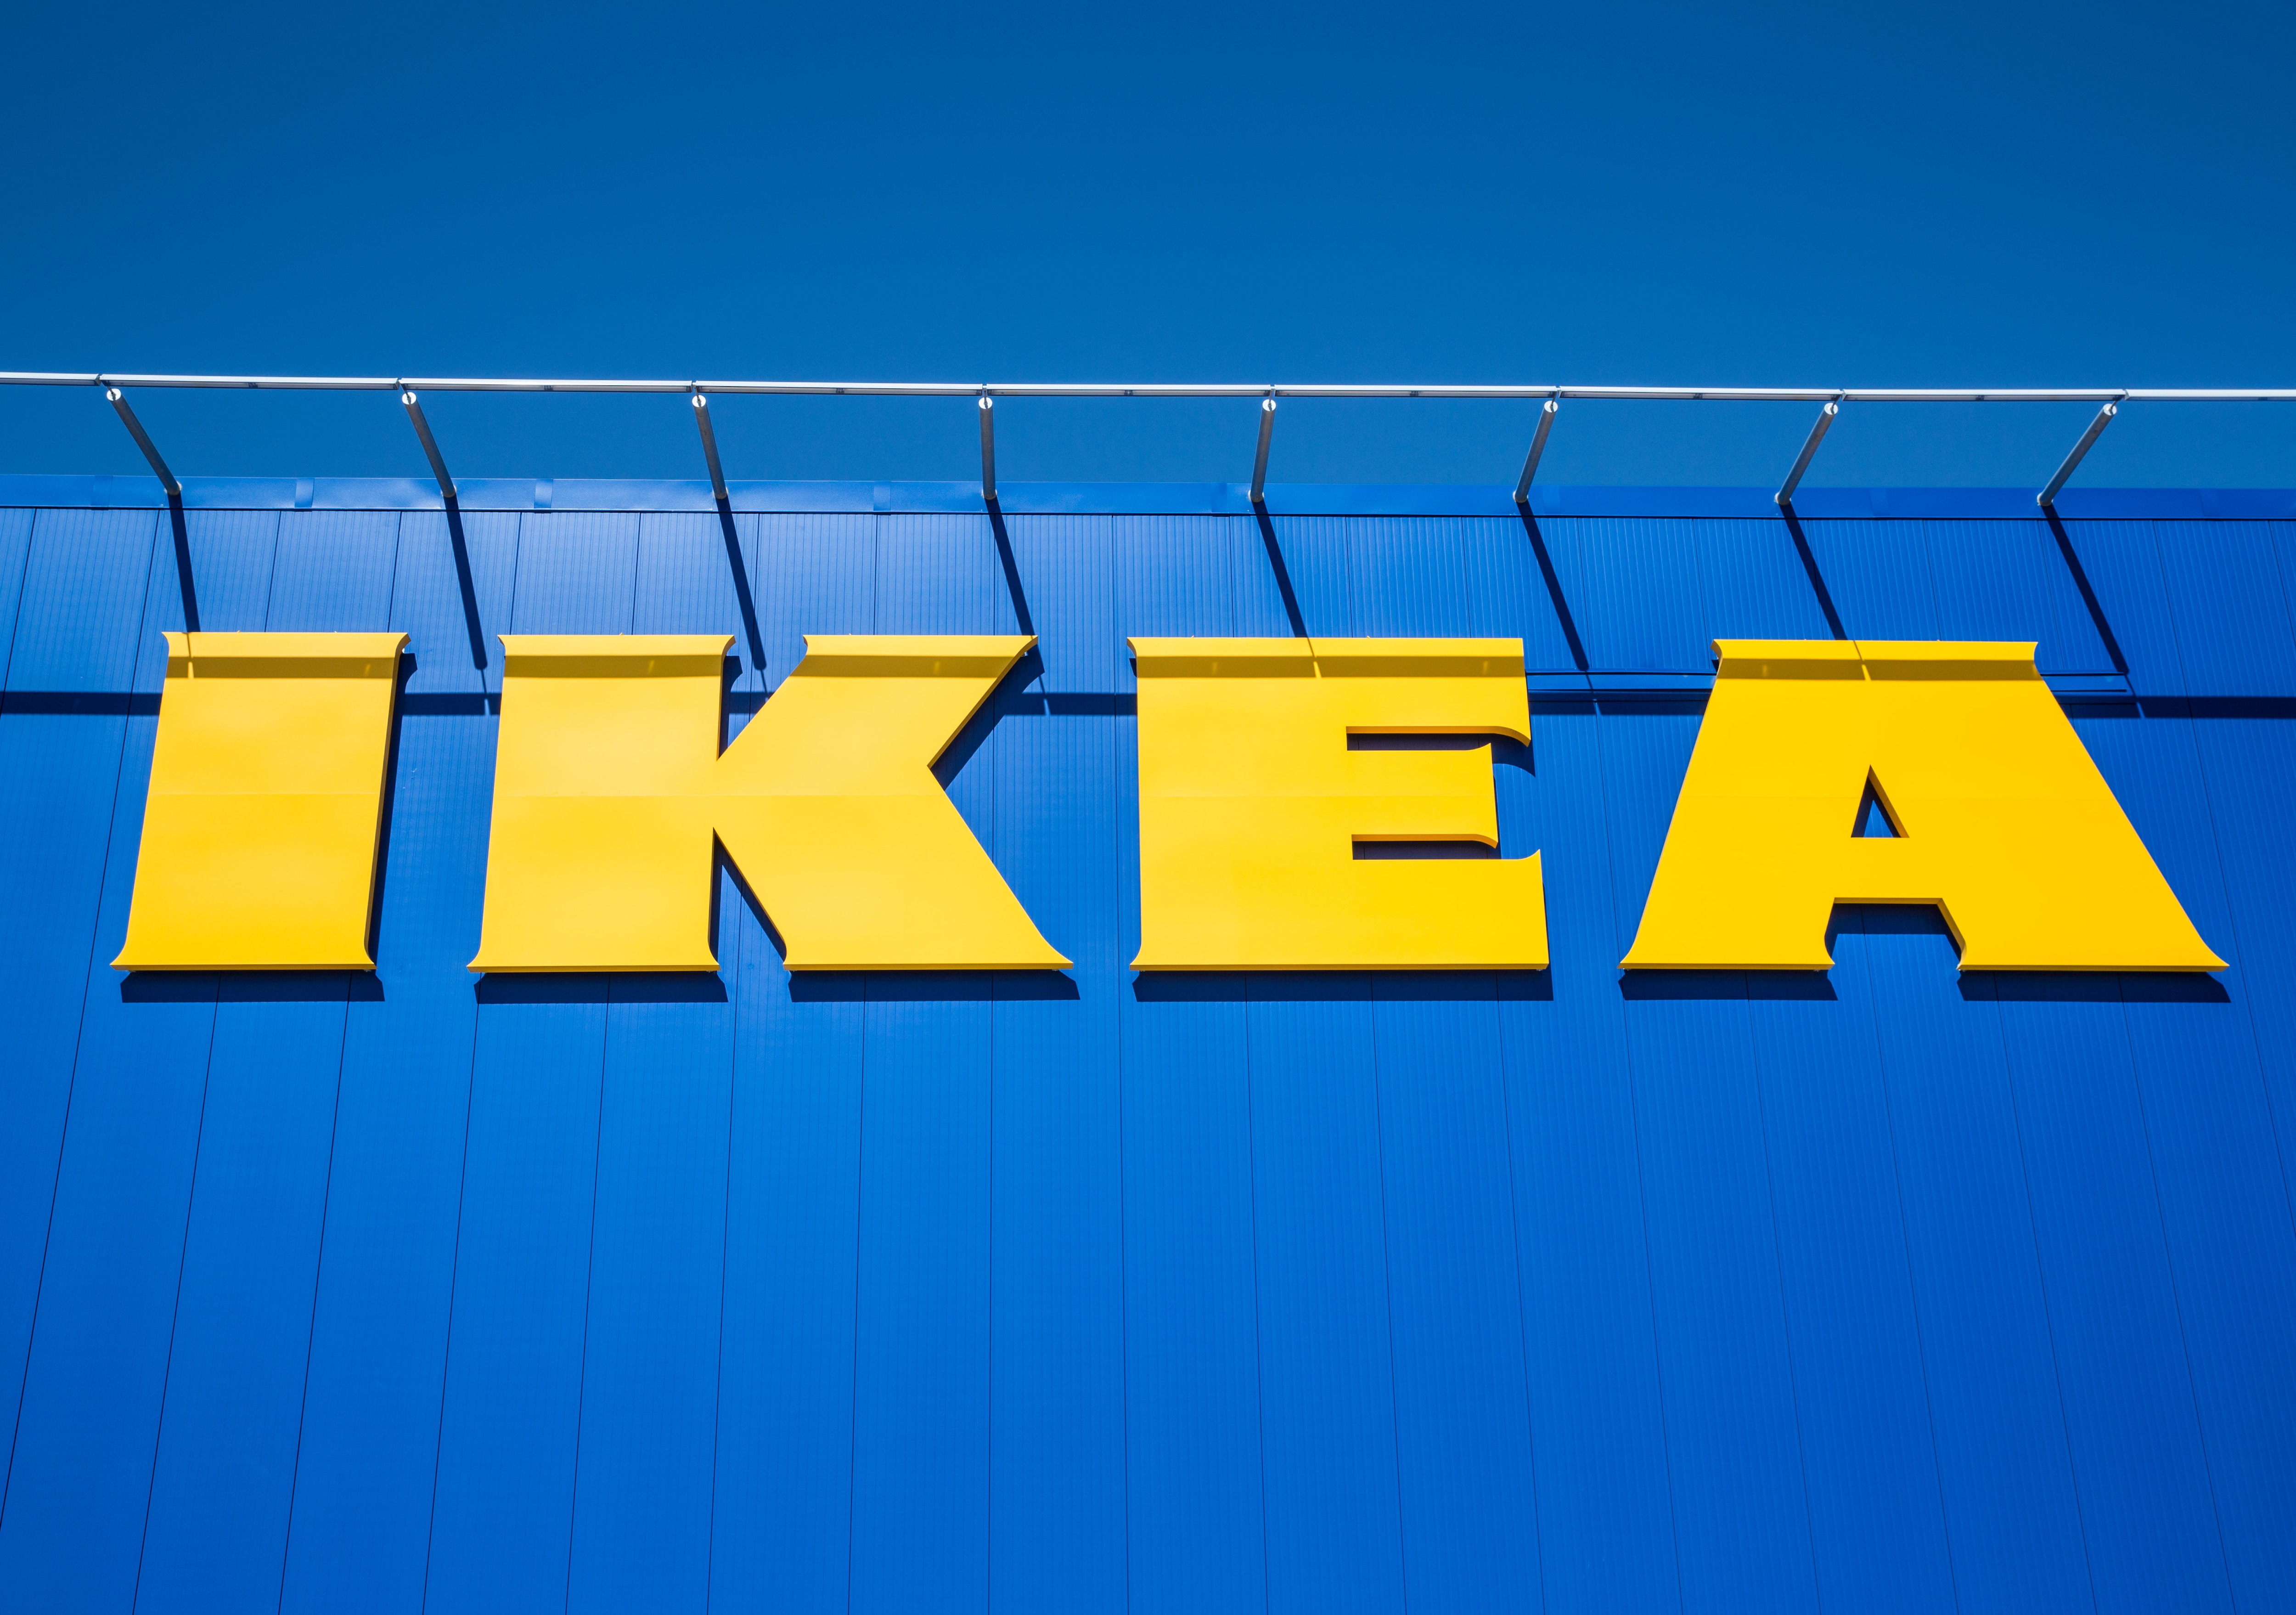 Ikea store banner